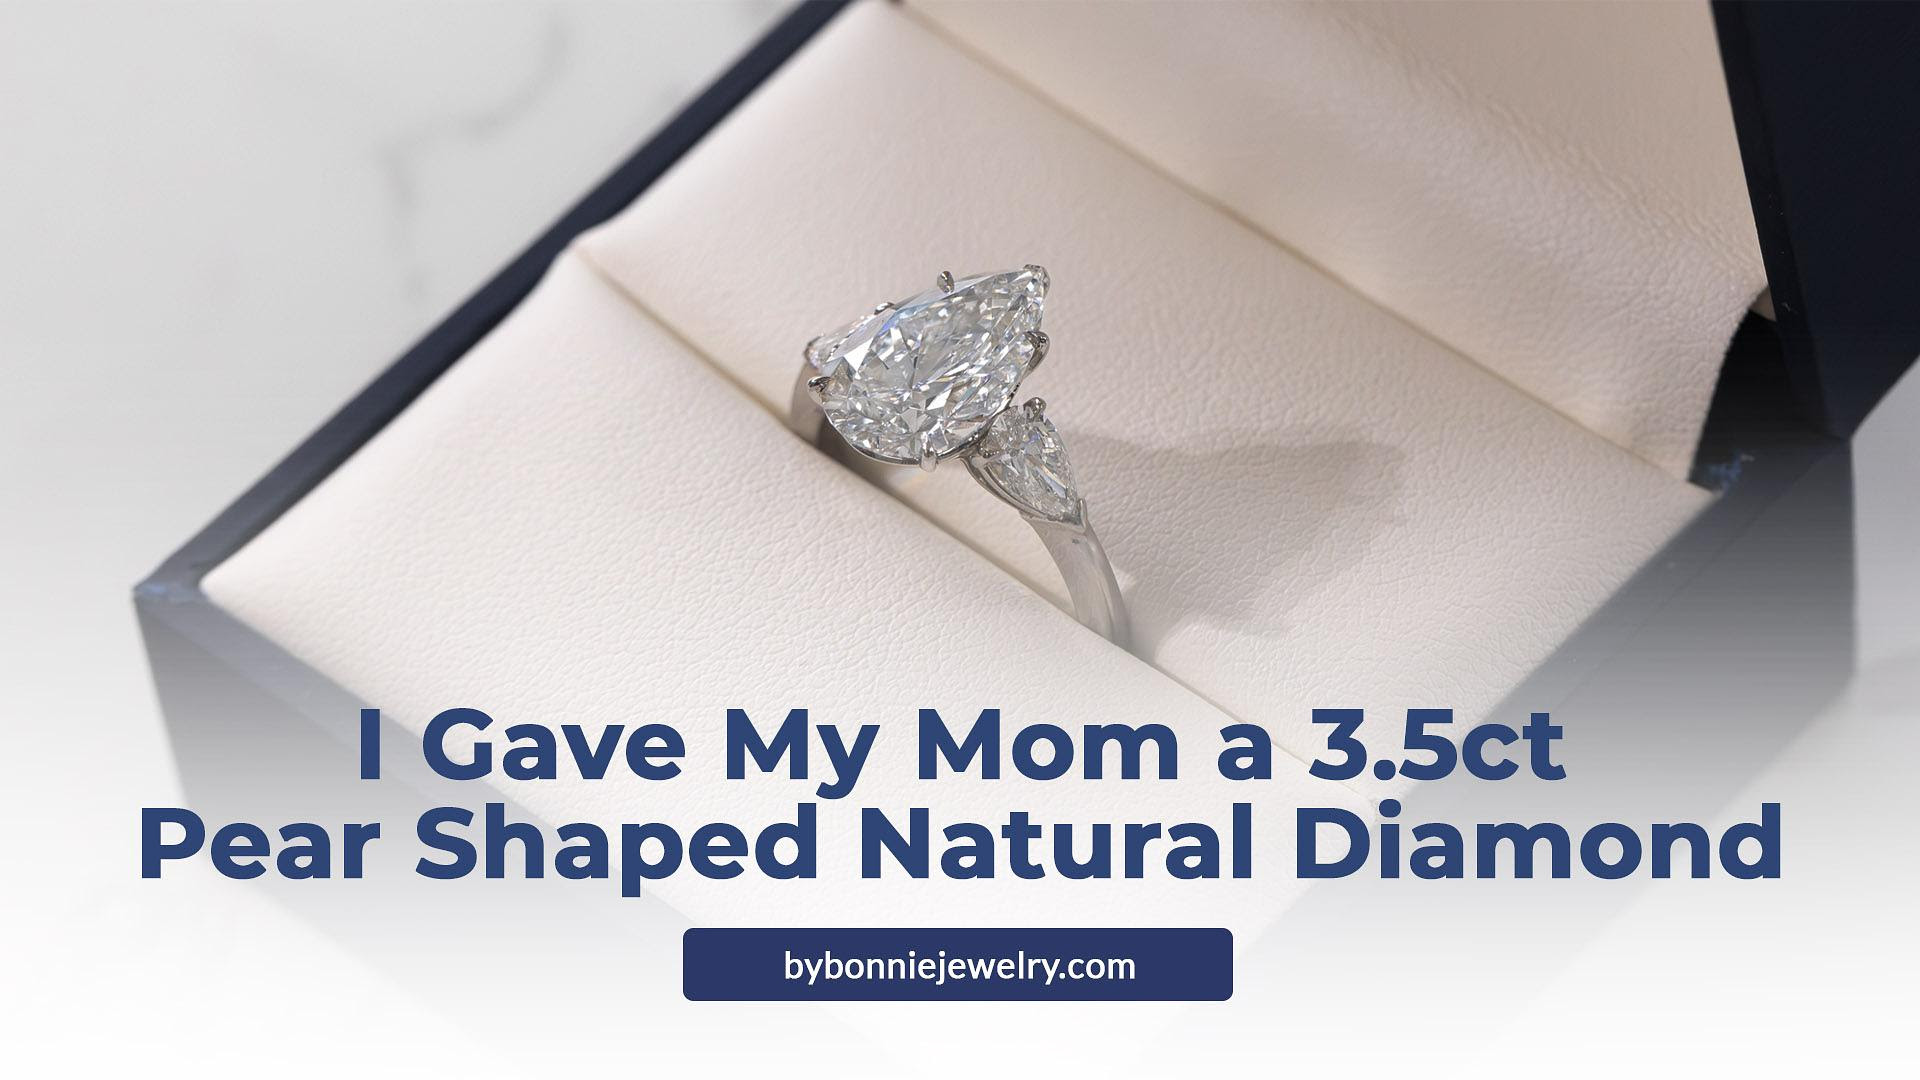 3.5 carat pear shape diamond ring